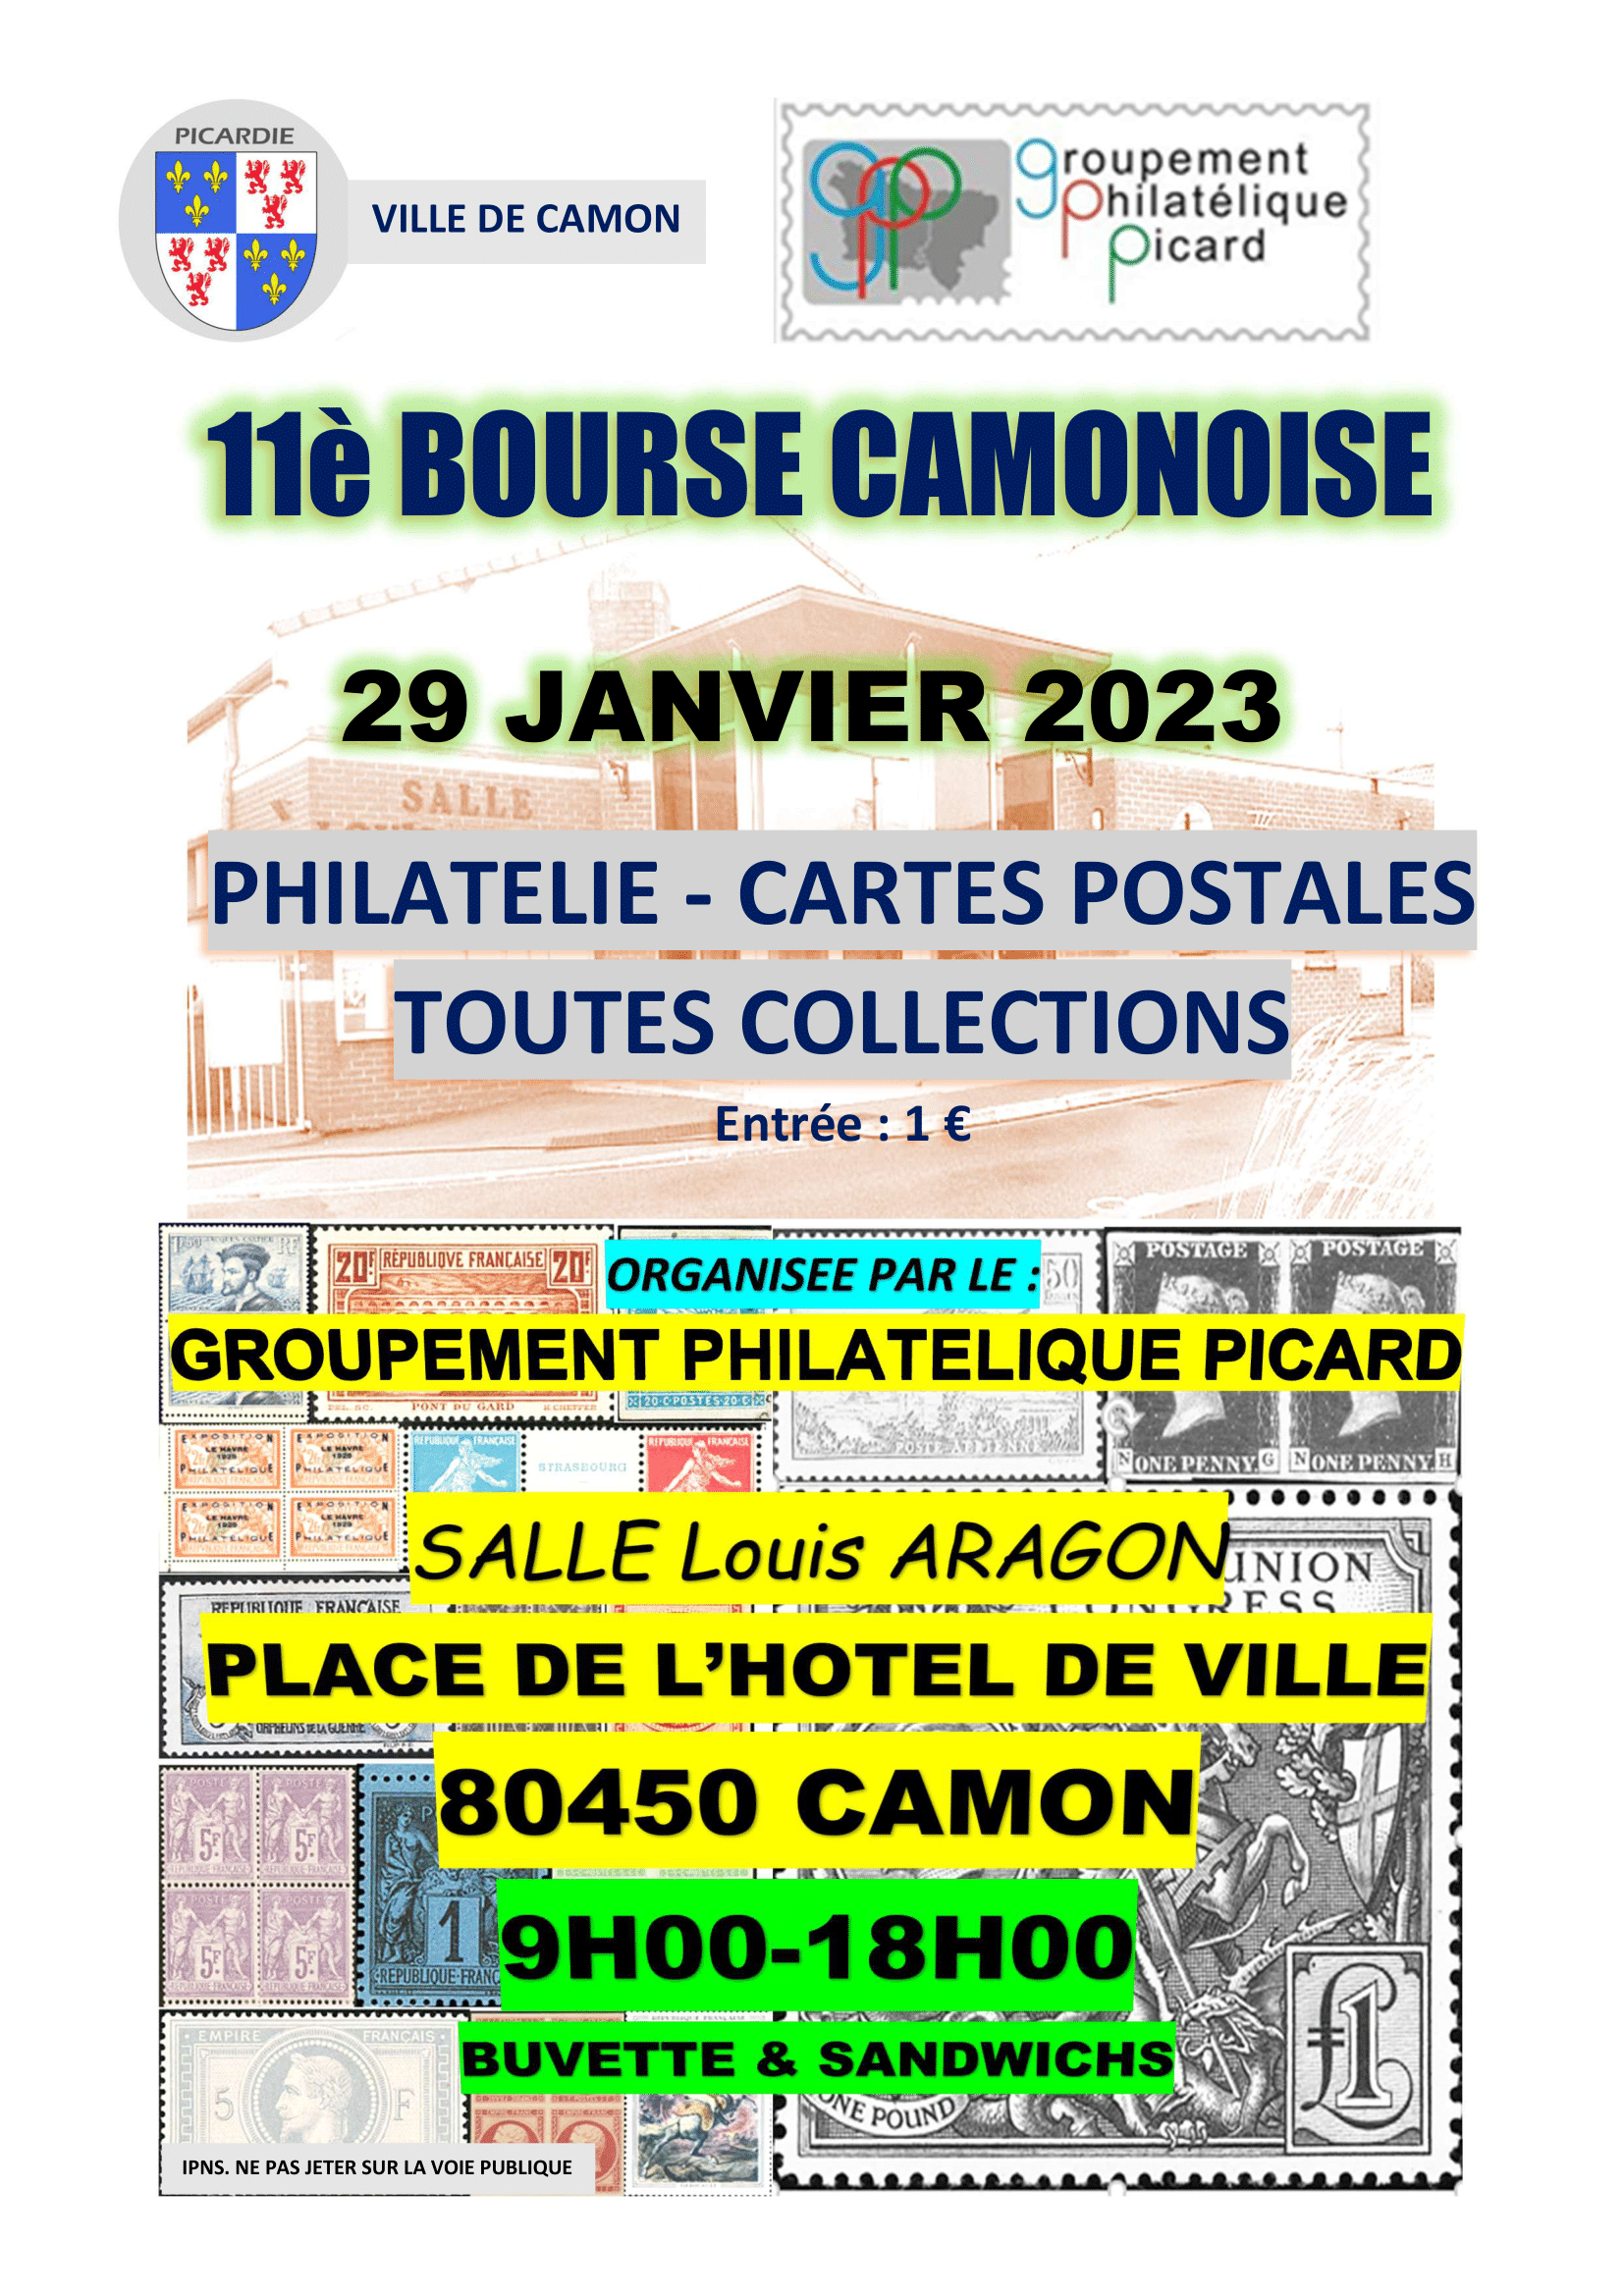 BOURSE CAMONOISE 2023